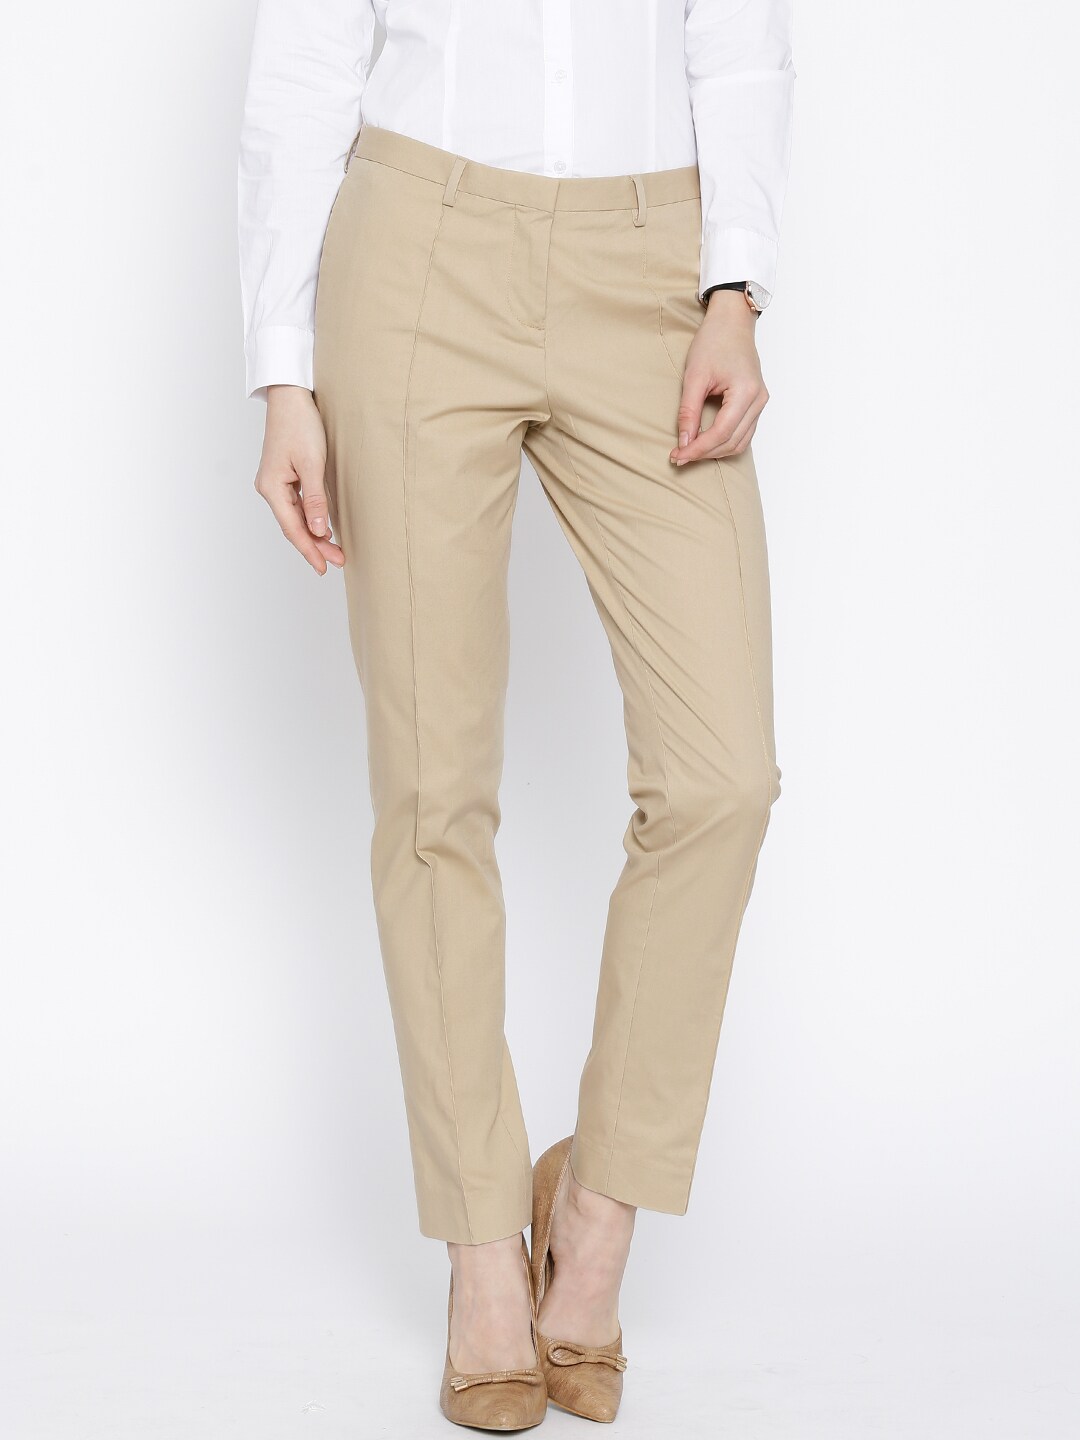 Buy Beige Cotton Slim Fit Formal Trousers online  Looksgudin